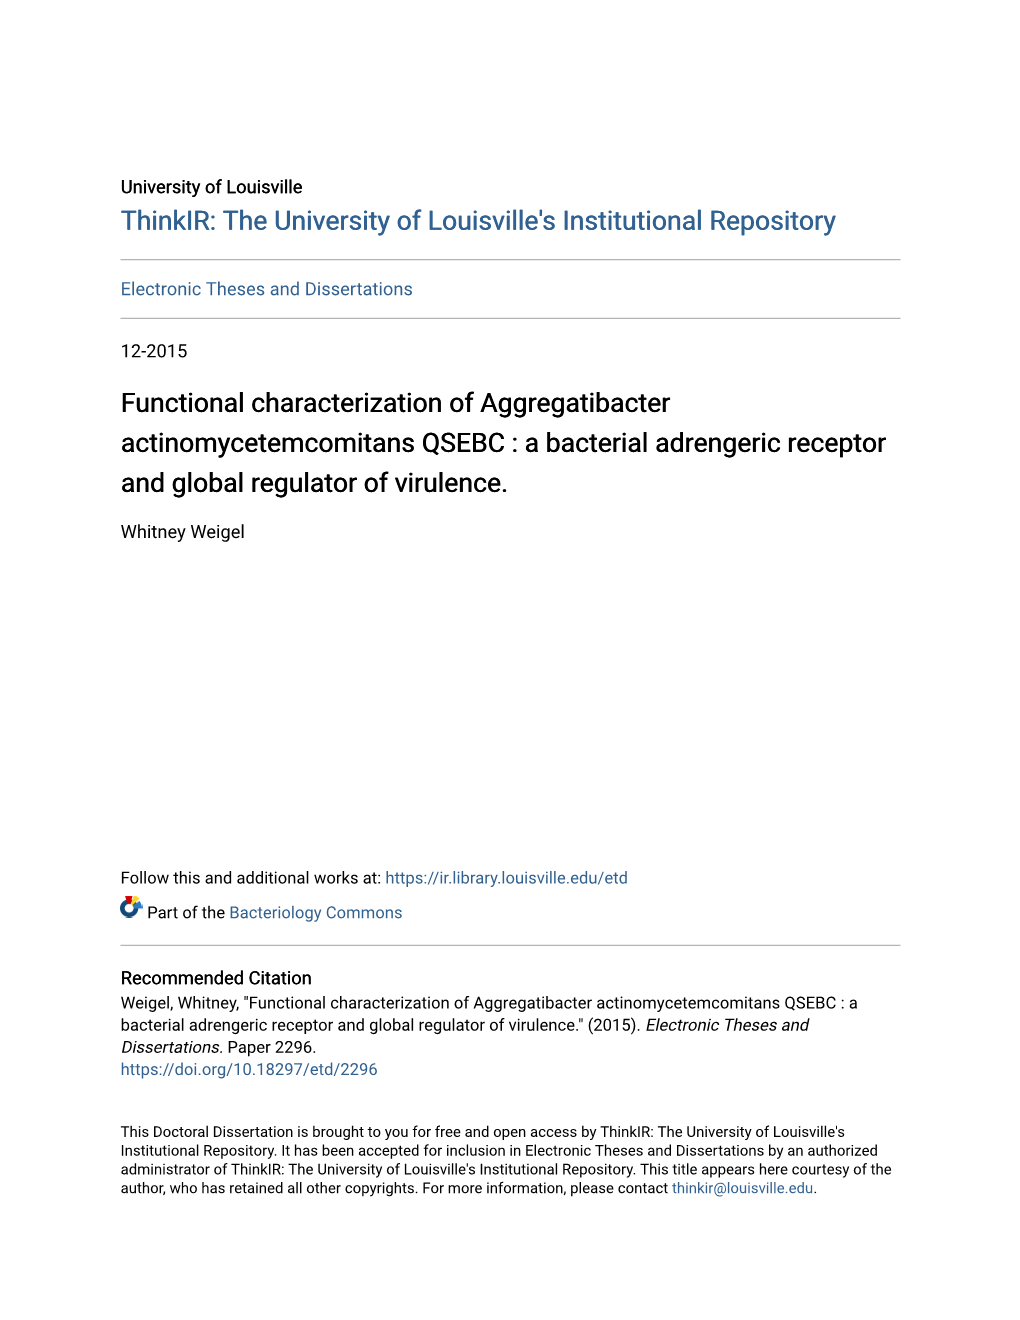 A Bacterial Adrengeric Receptor and Global Regulator of Virulence